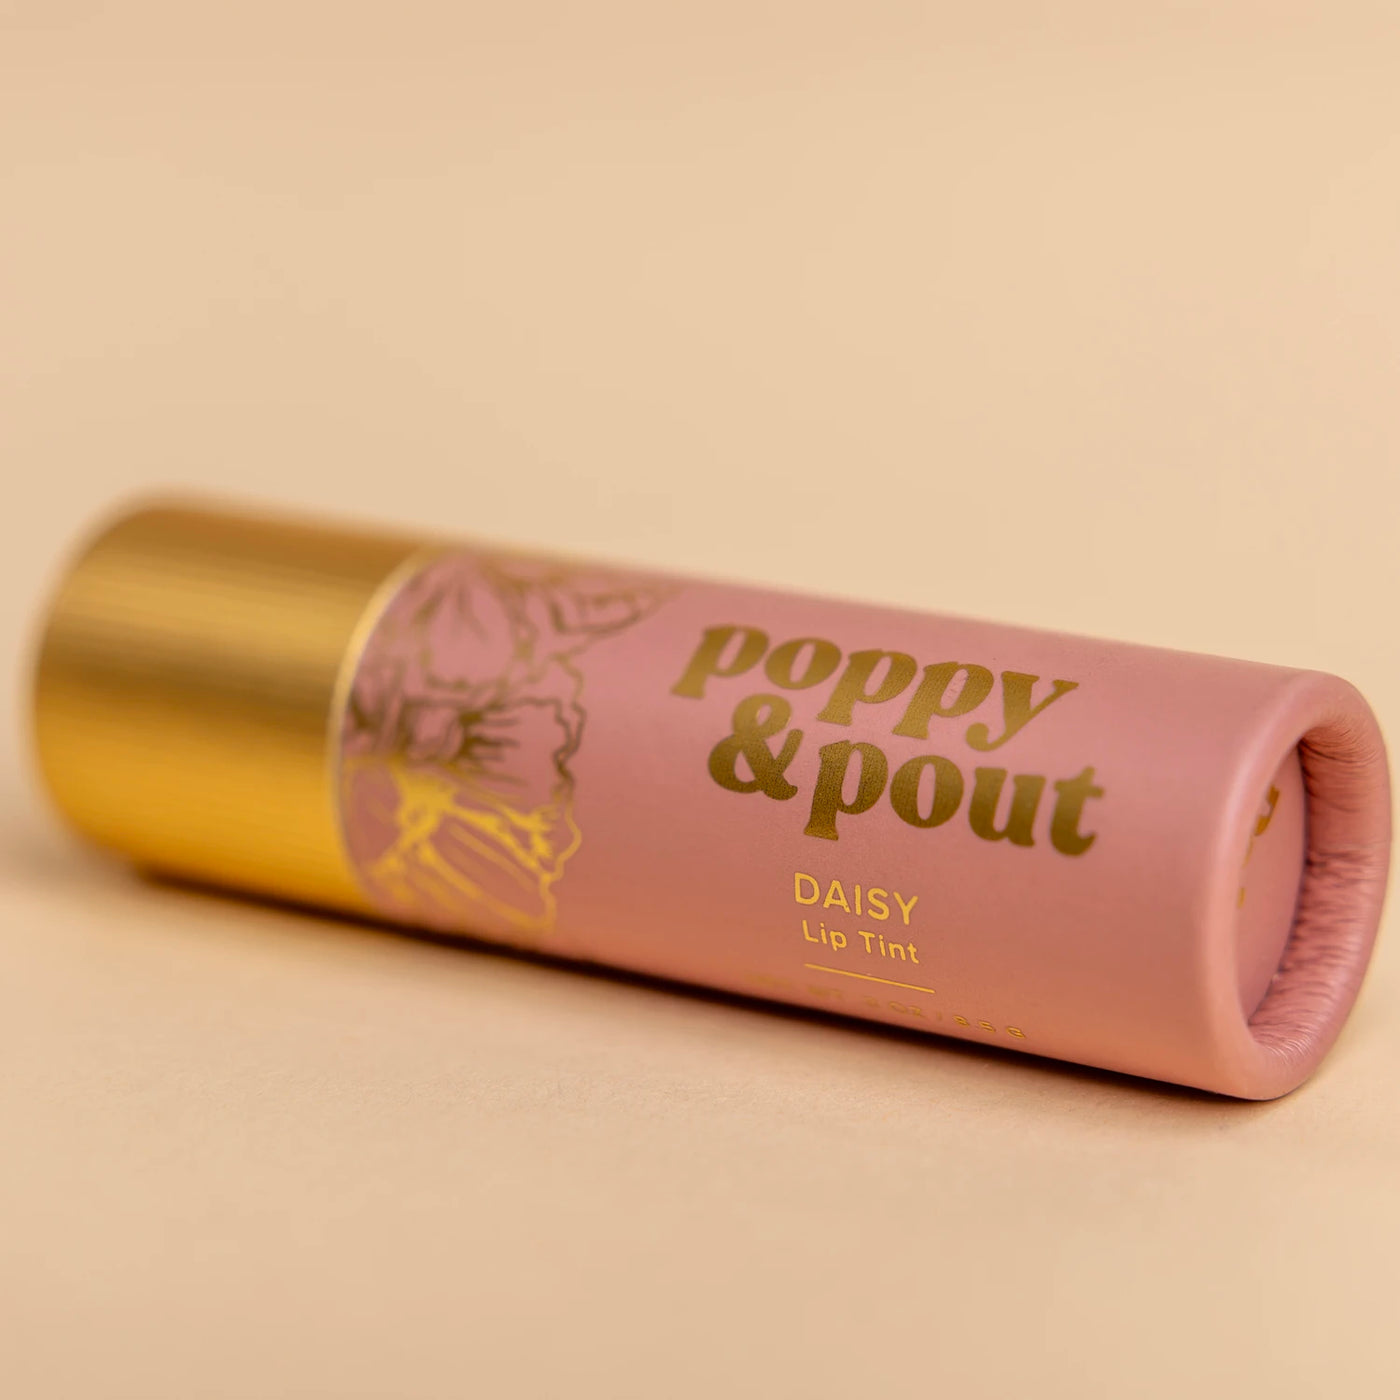 Poppy and POut Lip Tint Daisy